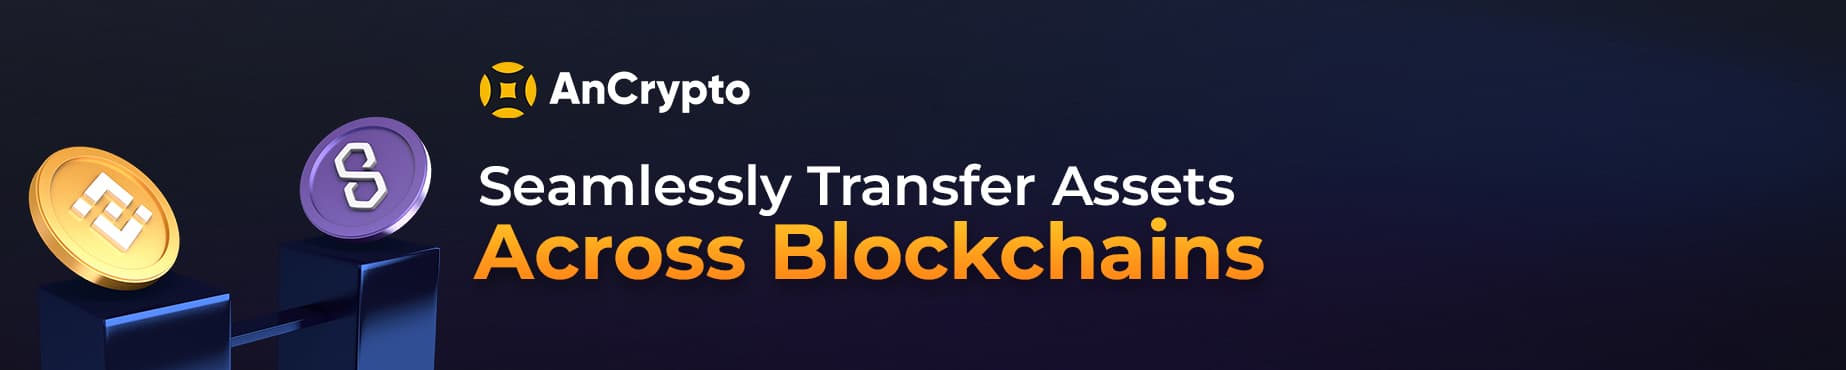 seamlessly transfer assets across blockchain cta button